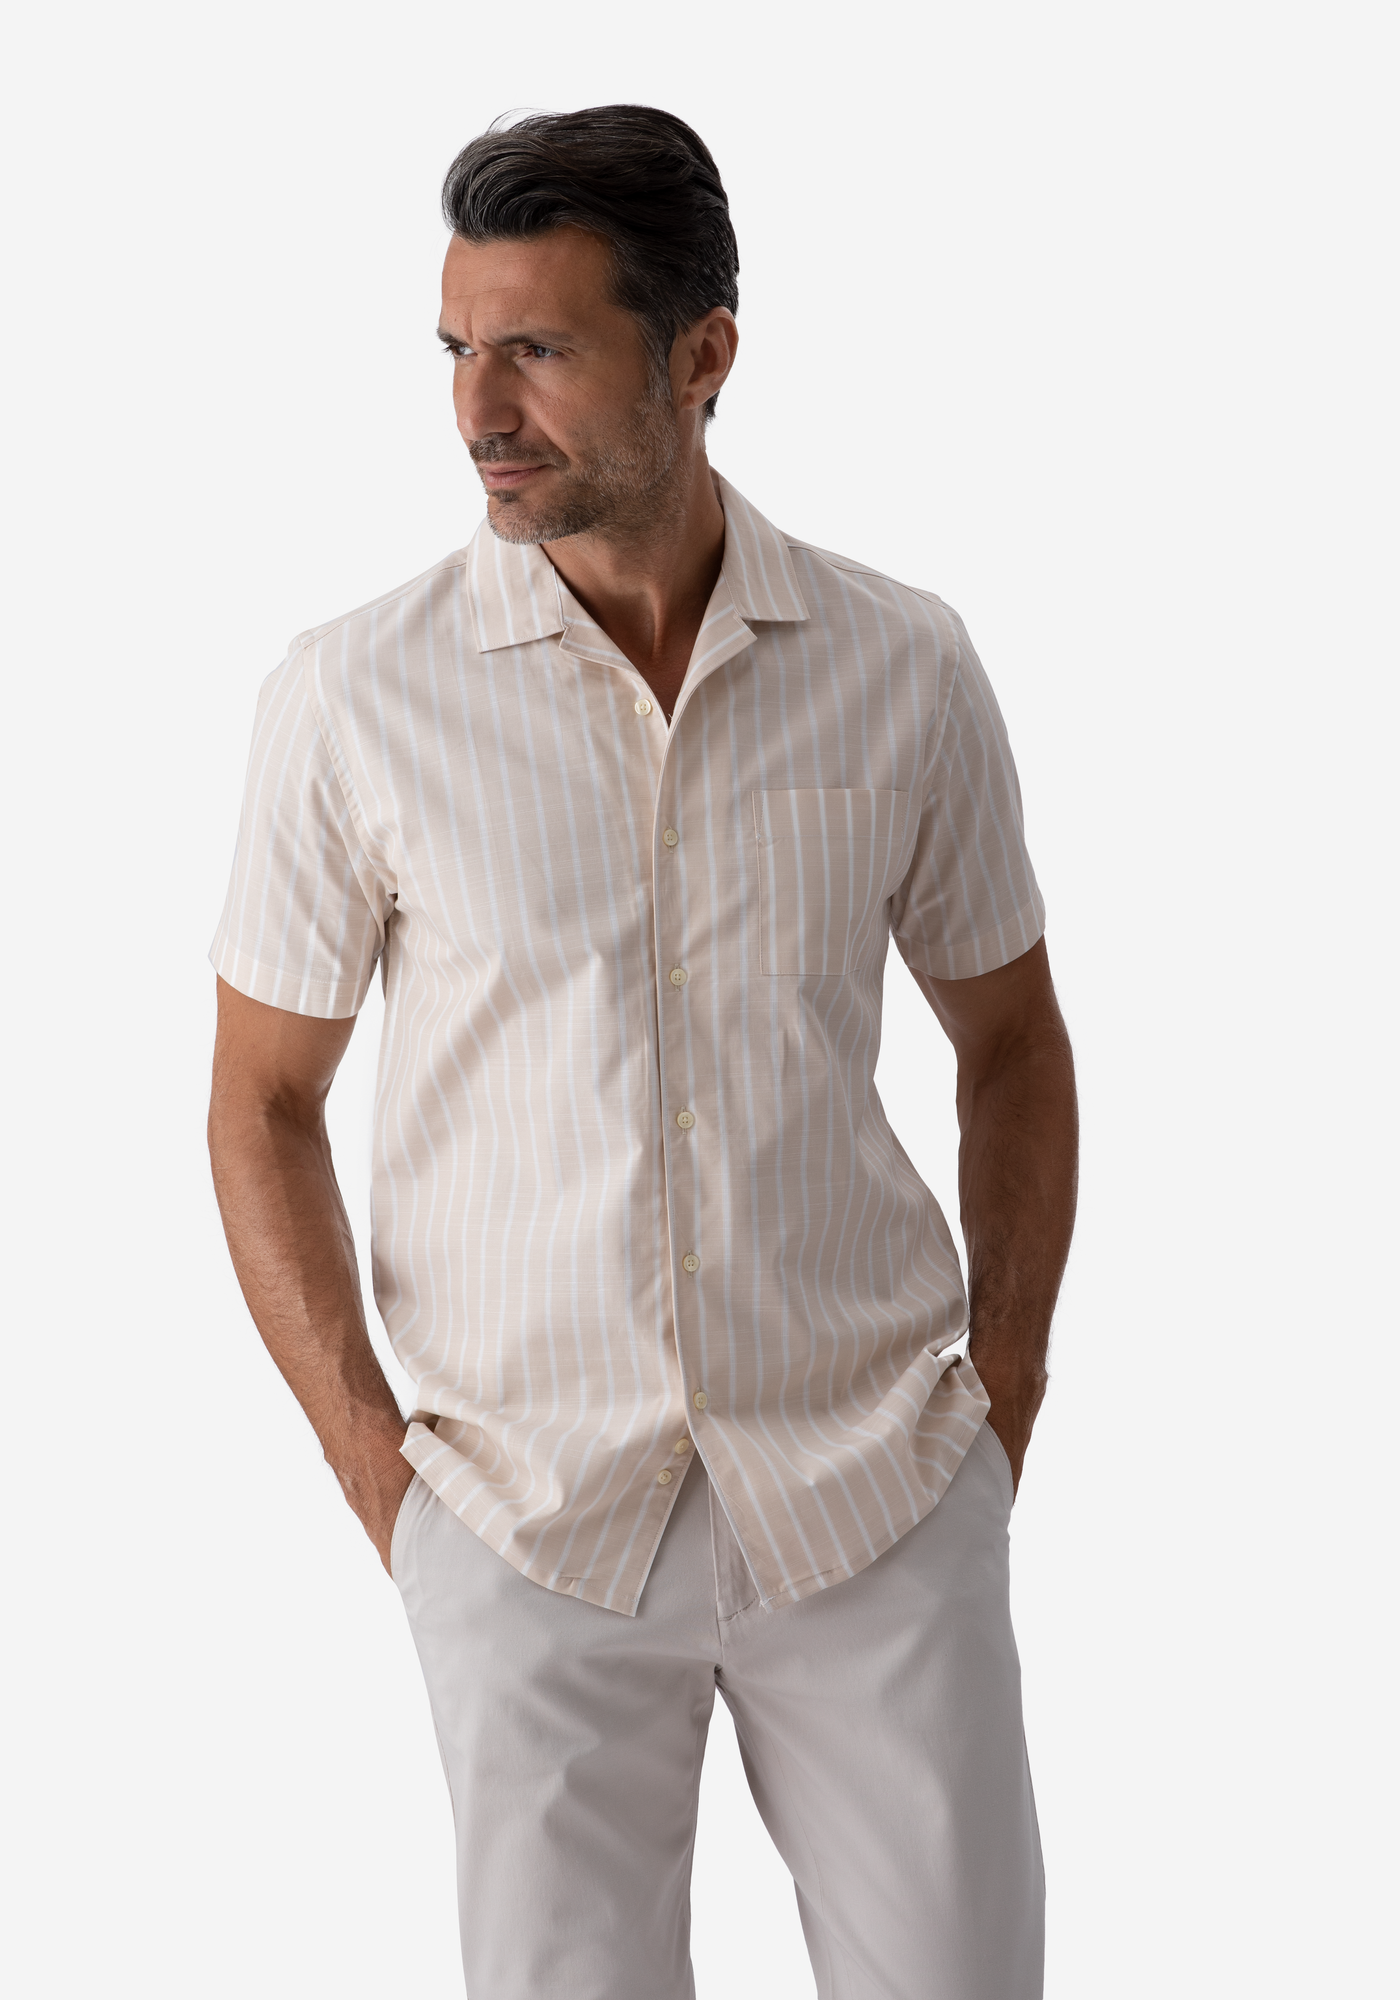 Sand Beige Stripe Resort Slub Shirt - Short Sleeve